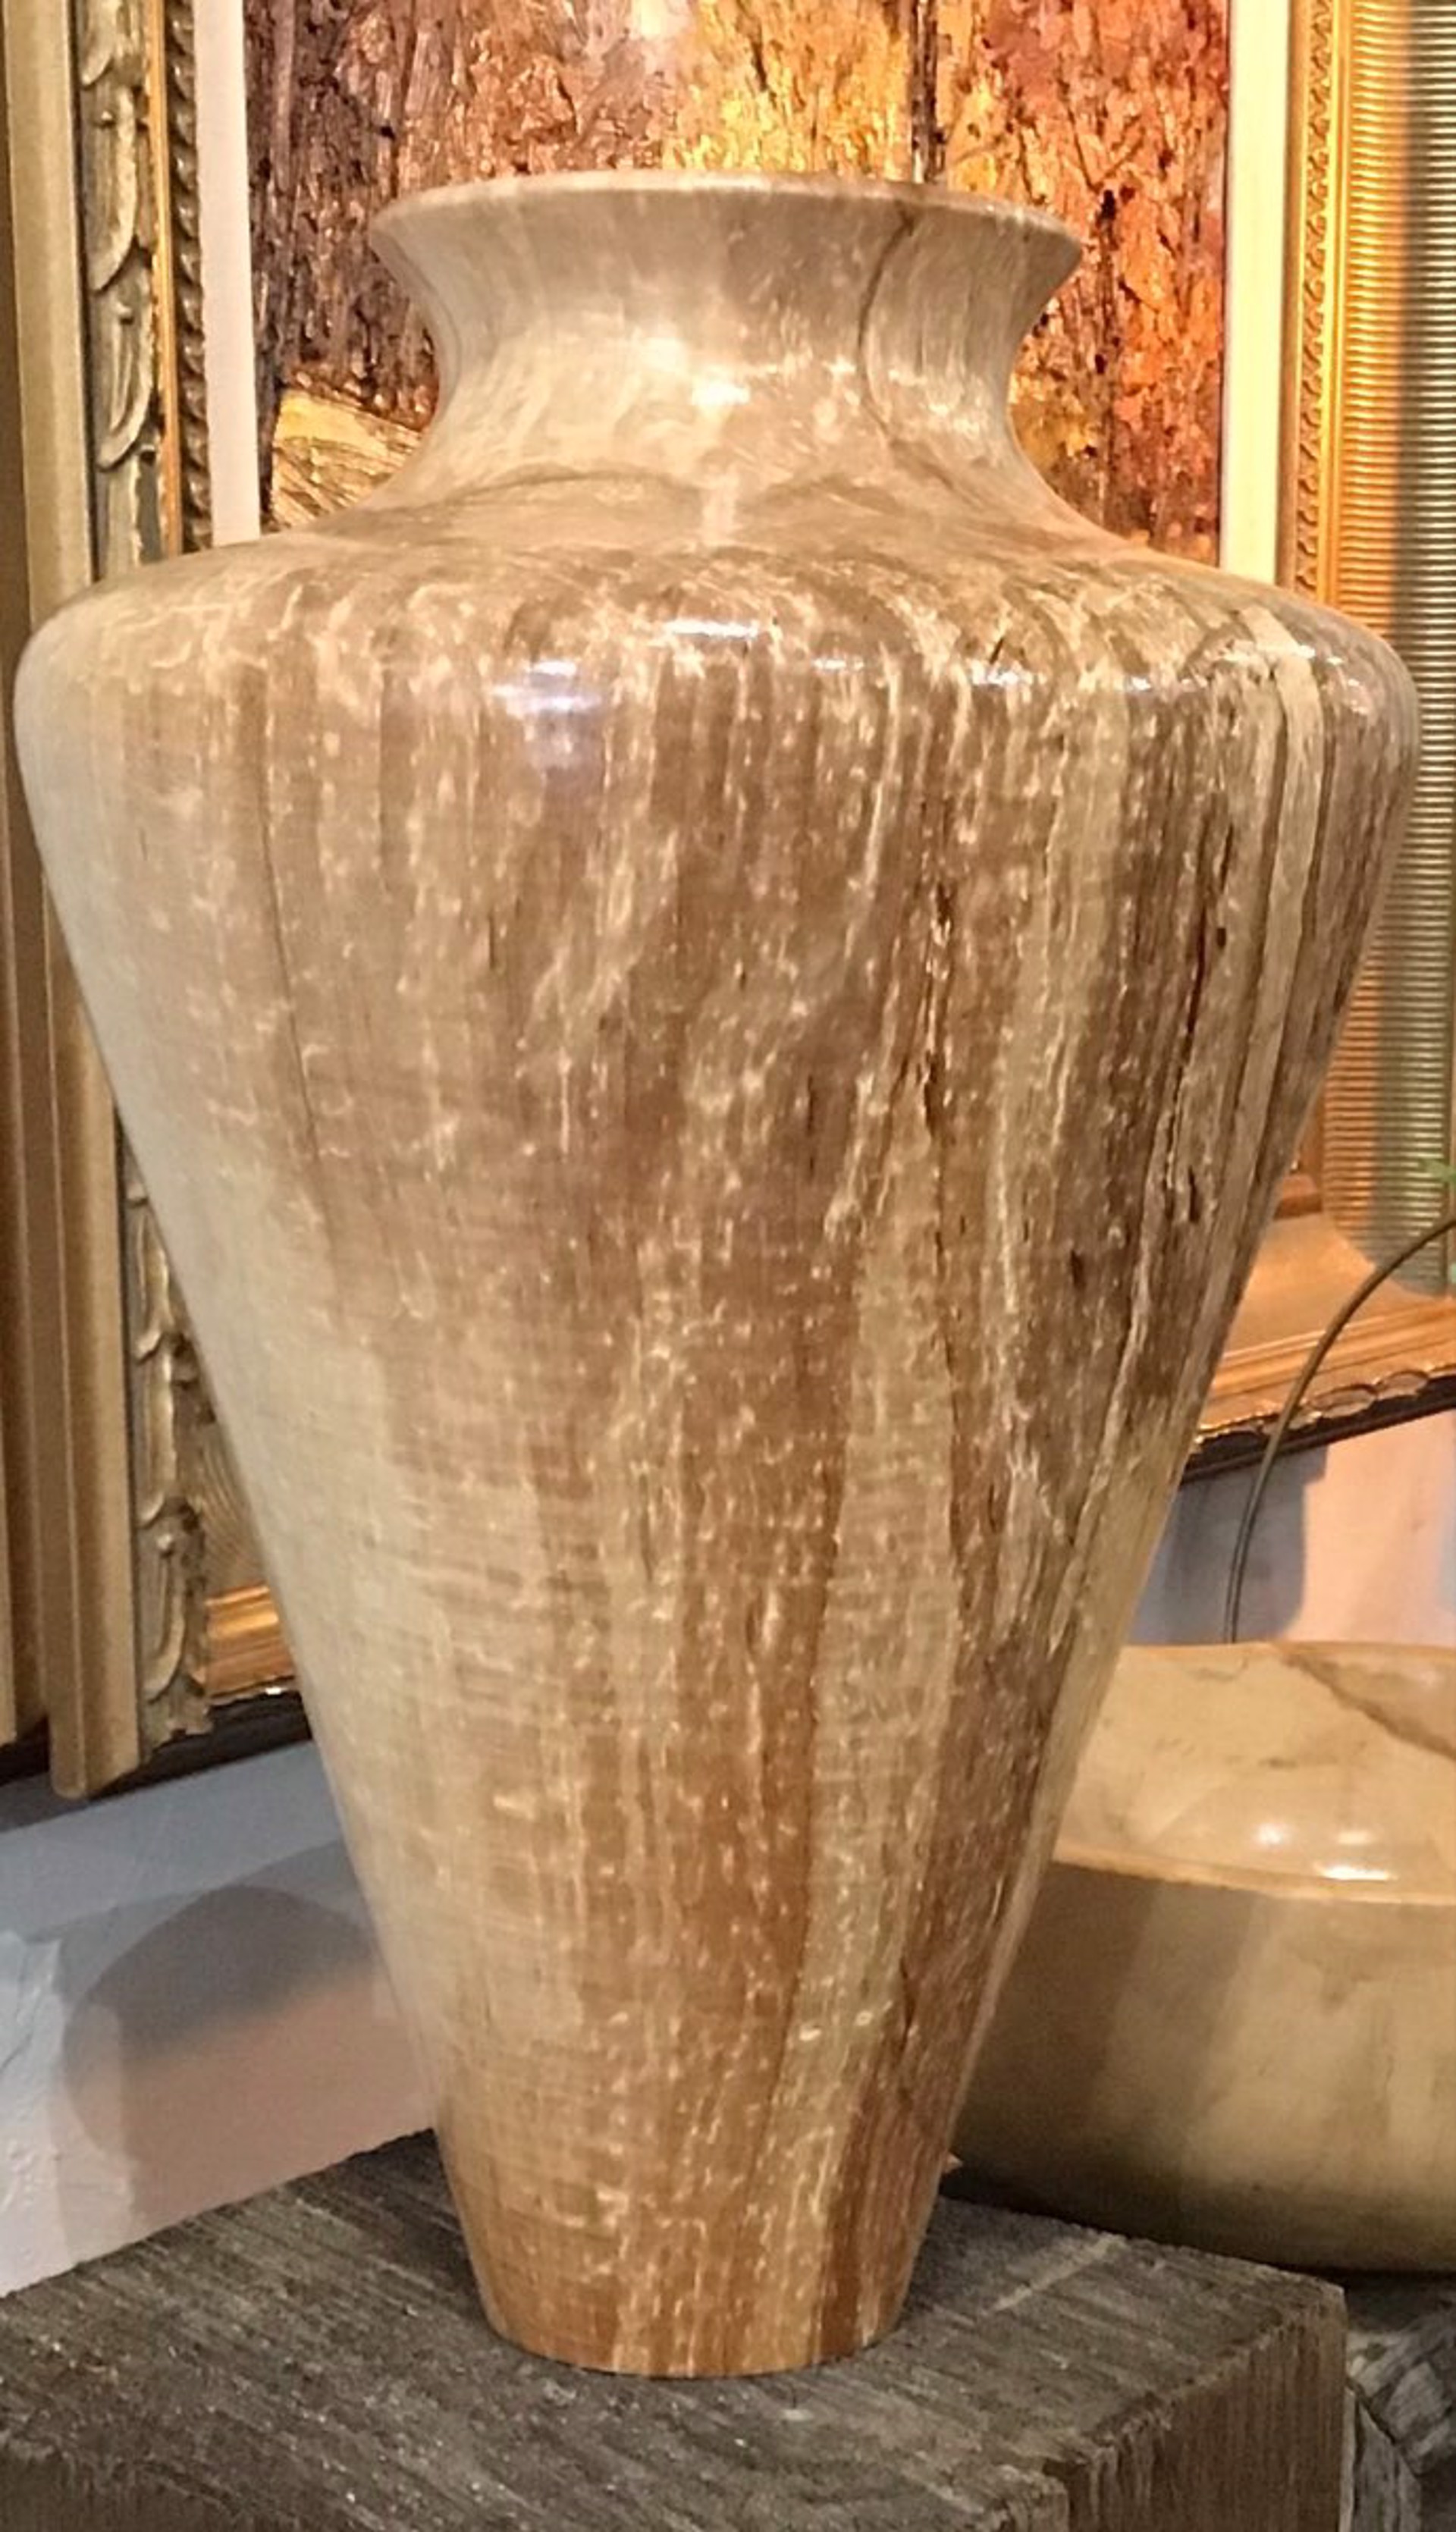 Spalted Maple Vase by Brian Higgins